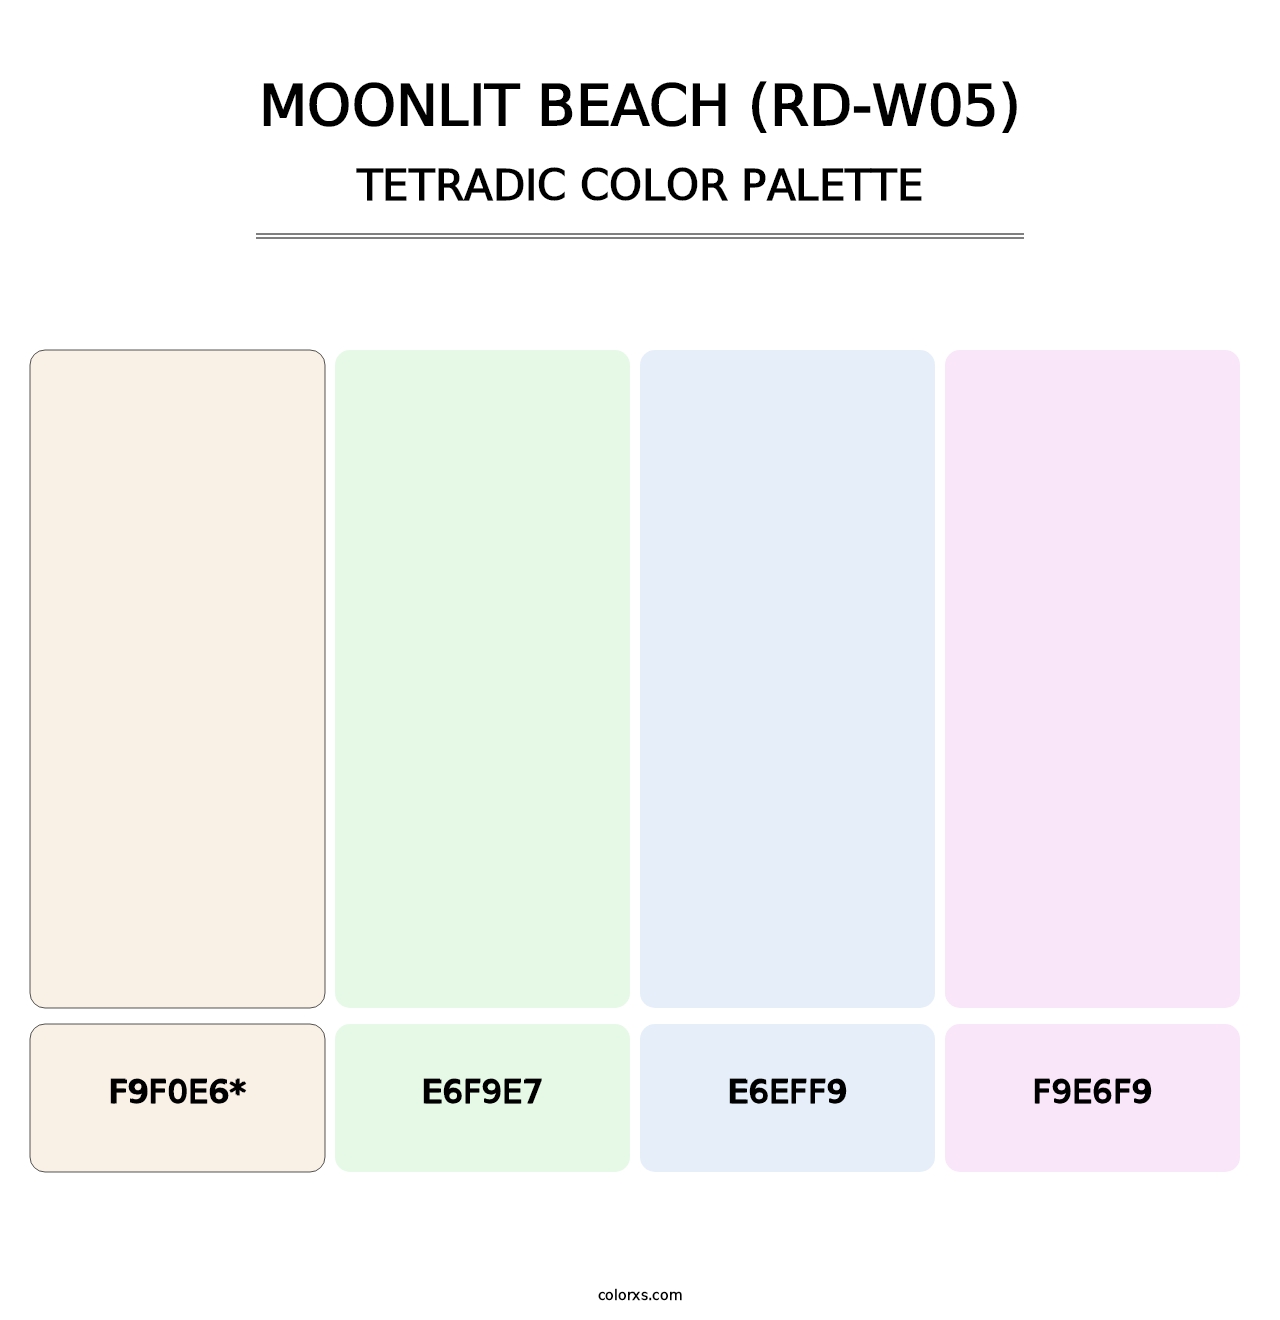 Moonlit Beach (RD-W05) - Tetradic Color Palette